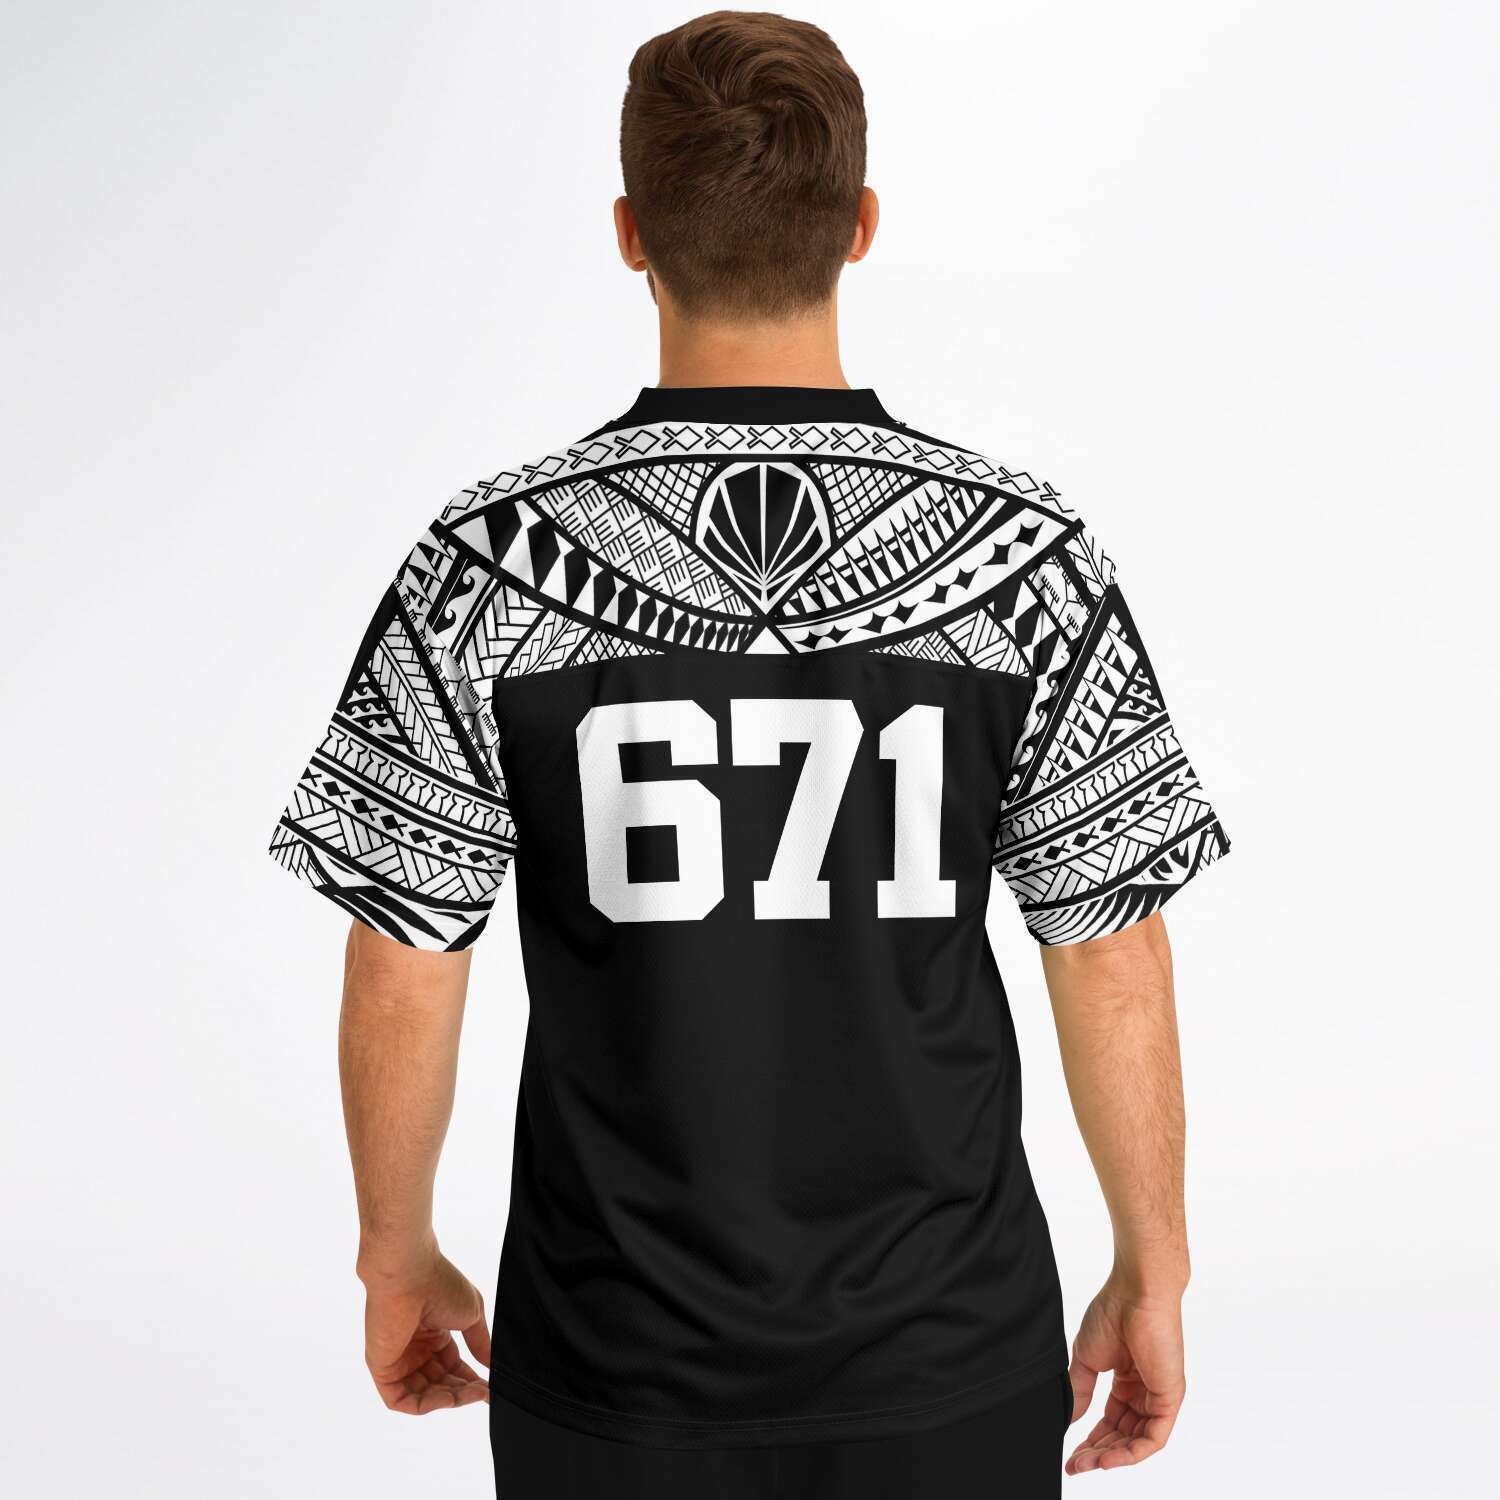 Guam 671 Tribal Black Football Jersey